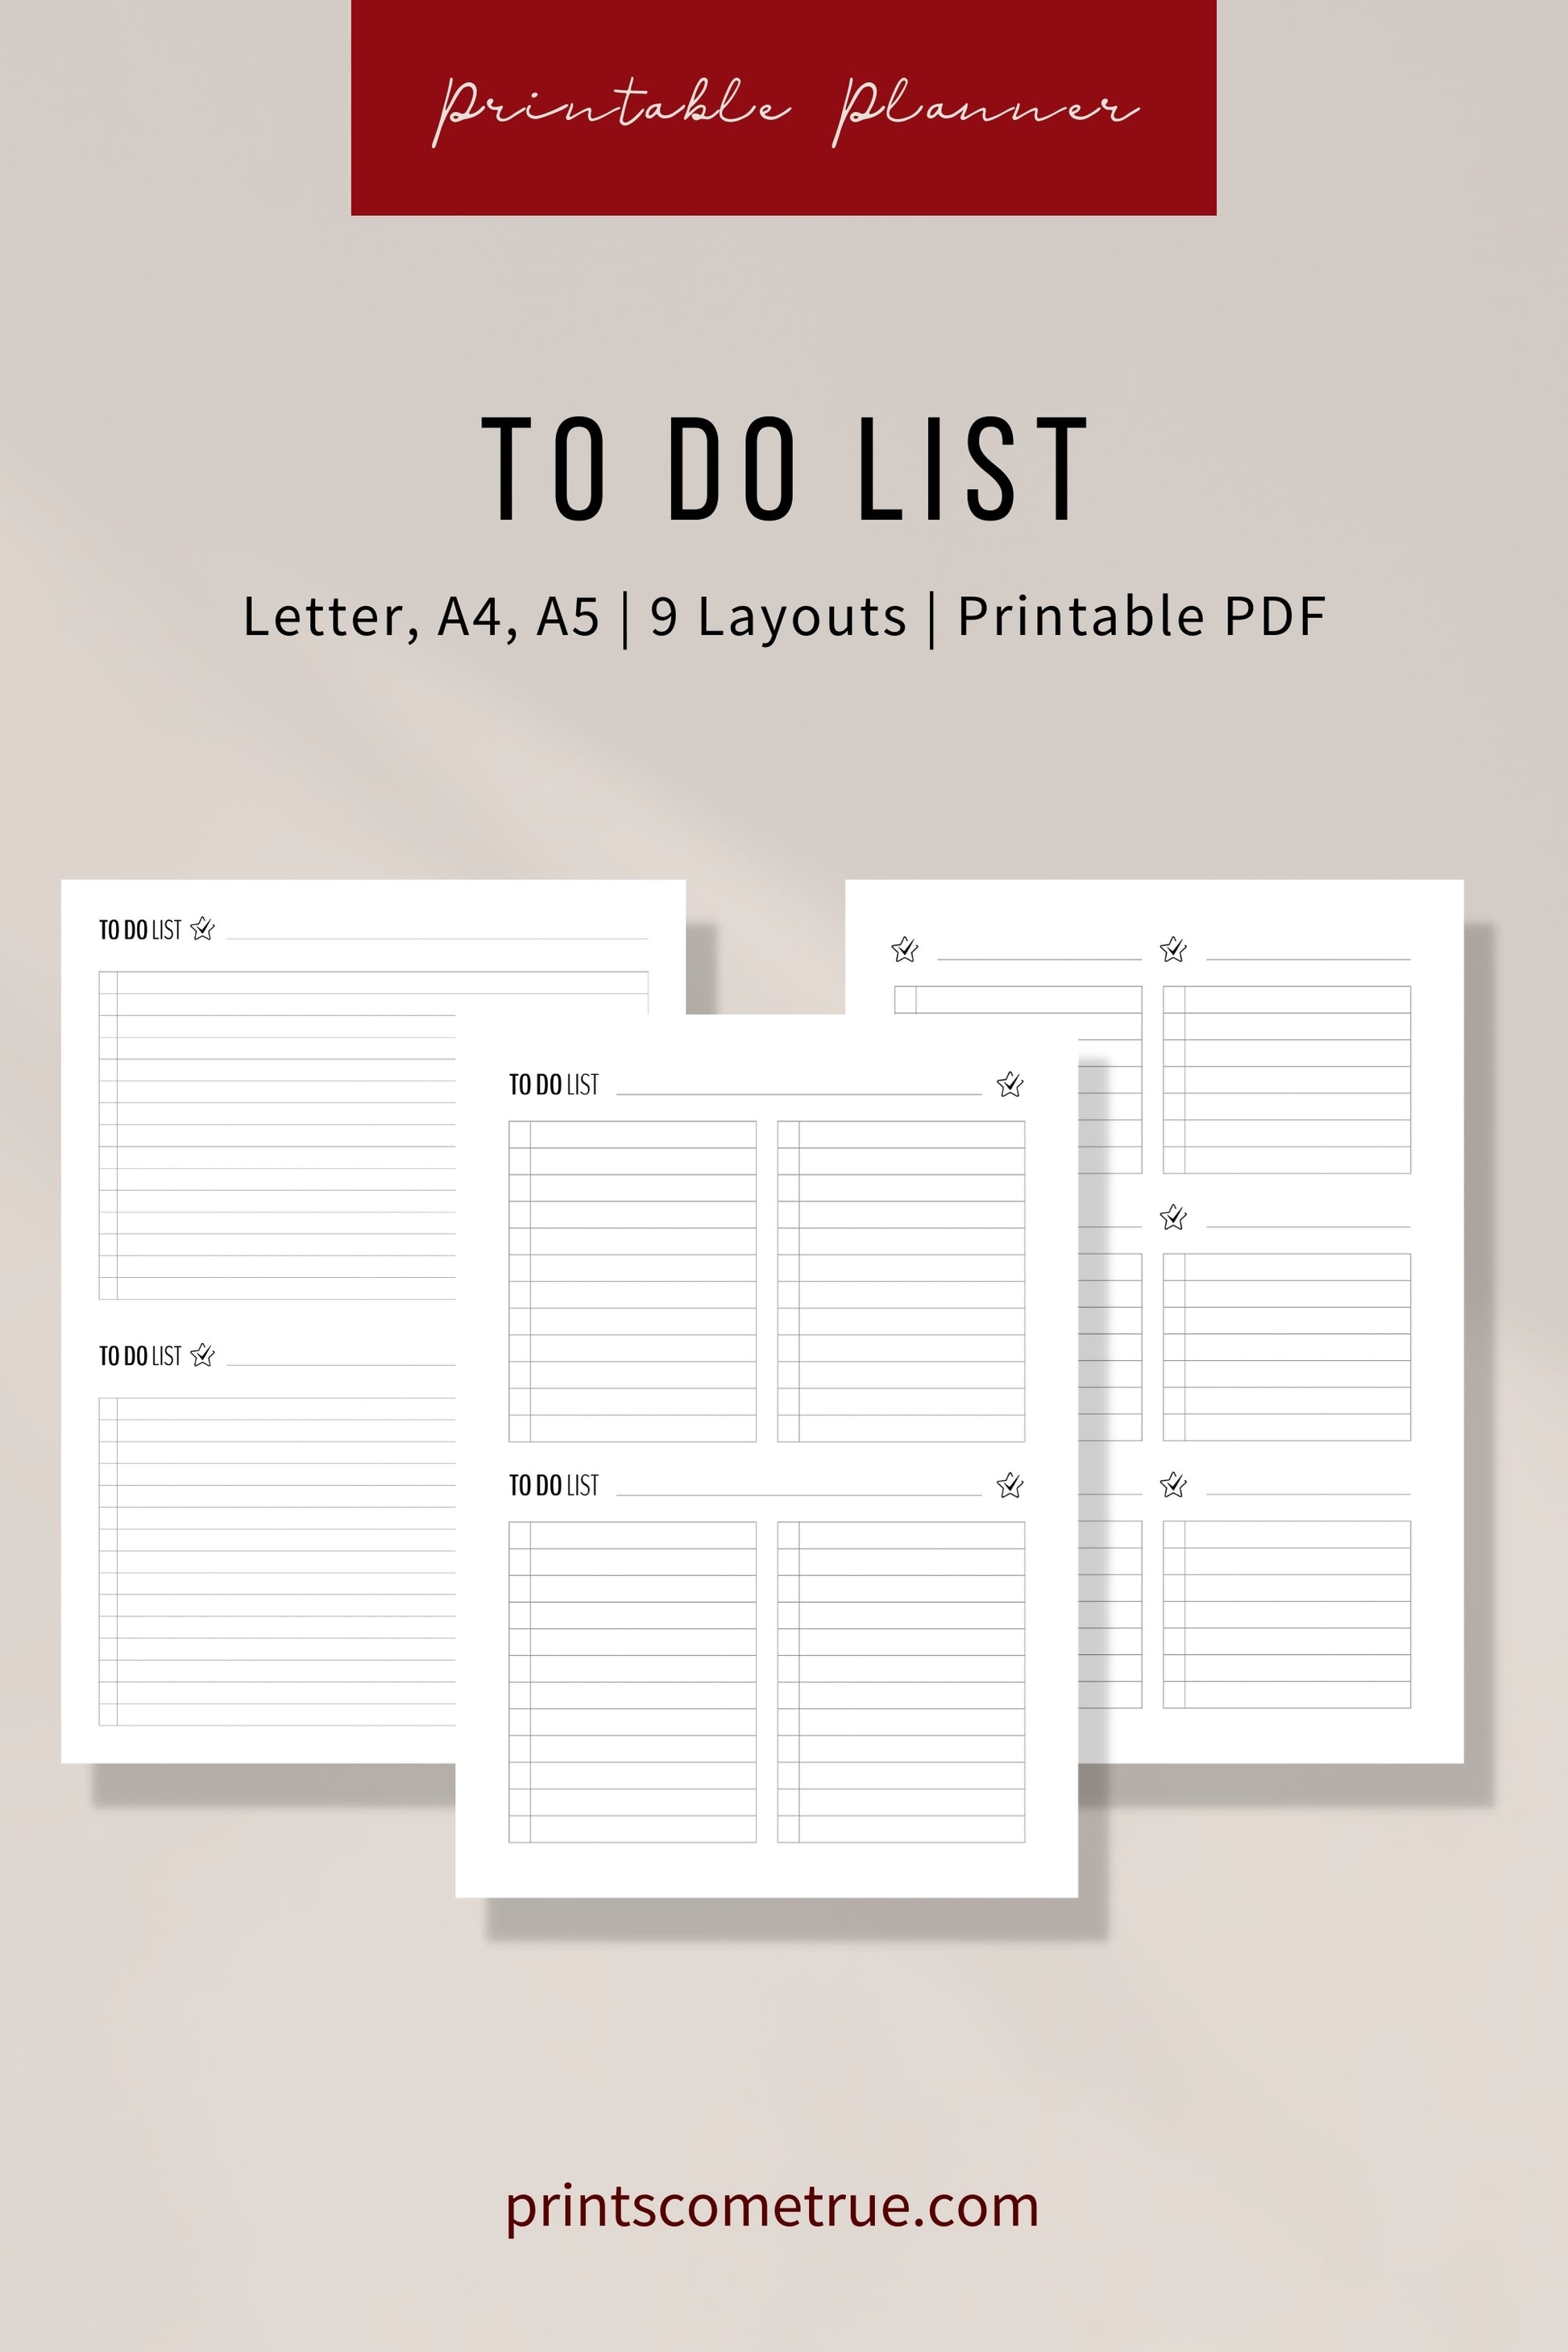 To Do List Printable Planner - PDF